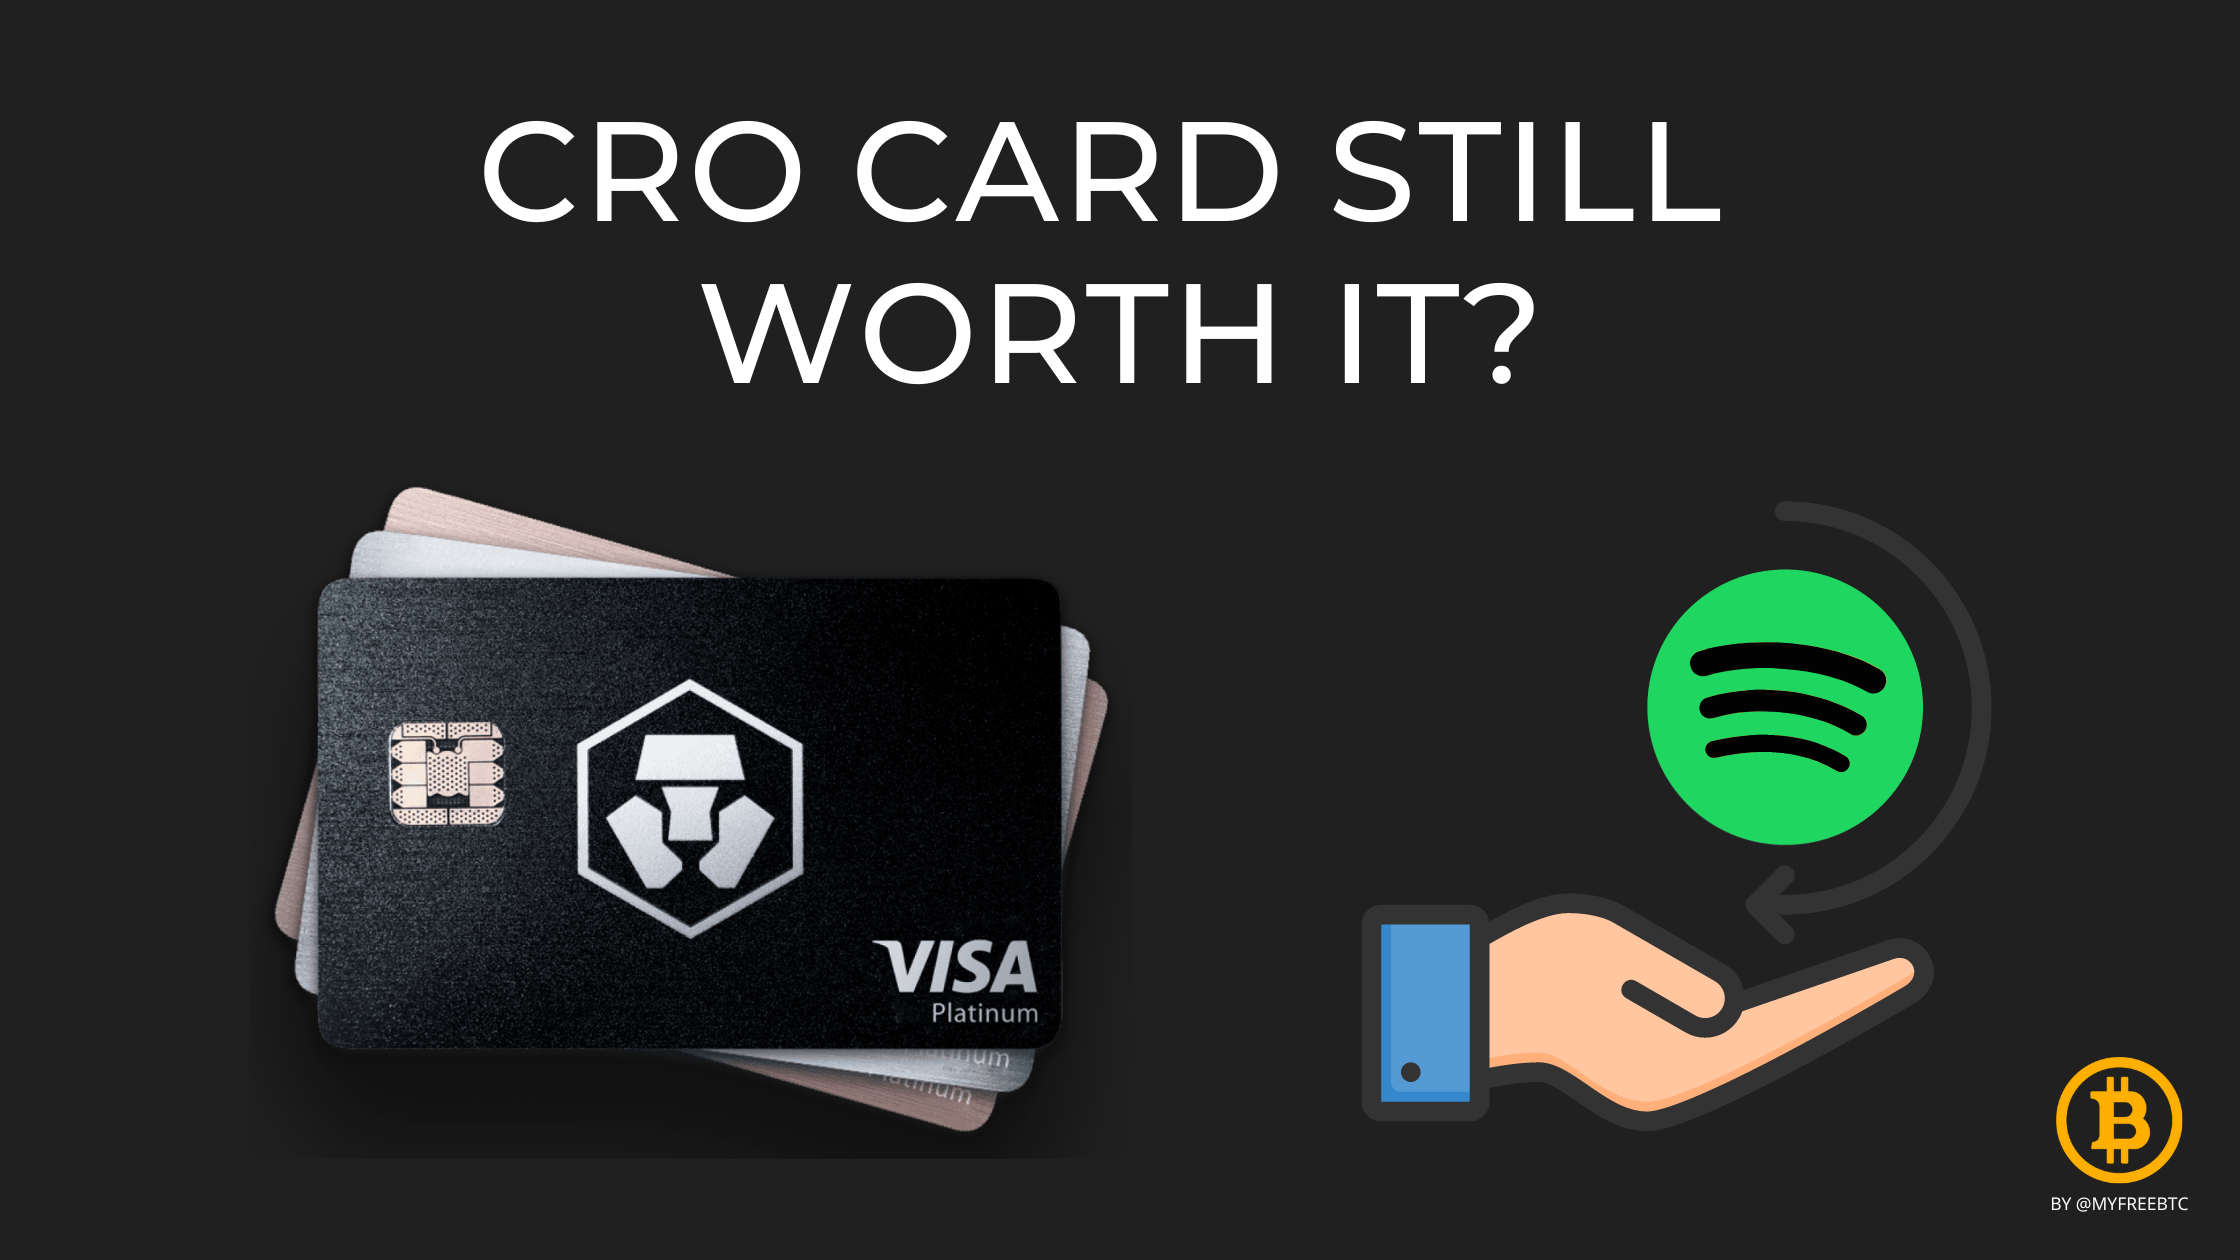 @myfreebtc/crypto-com-card-still-worth-it